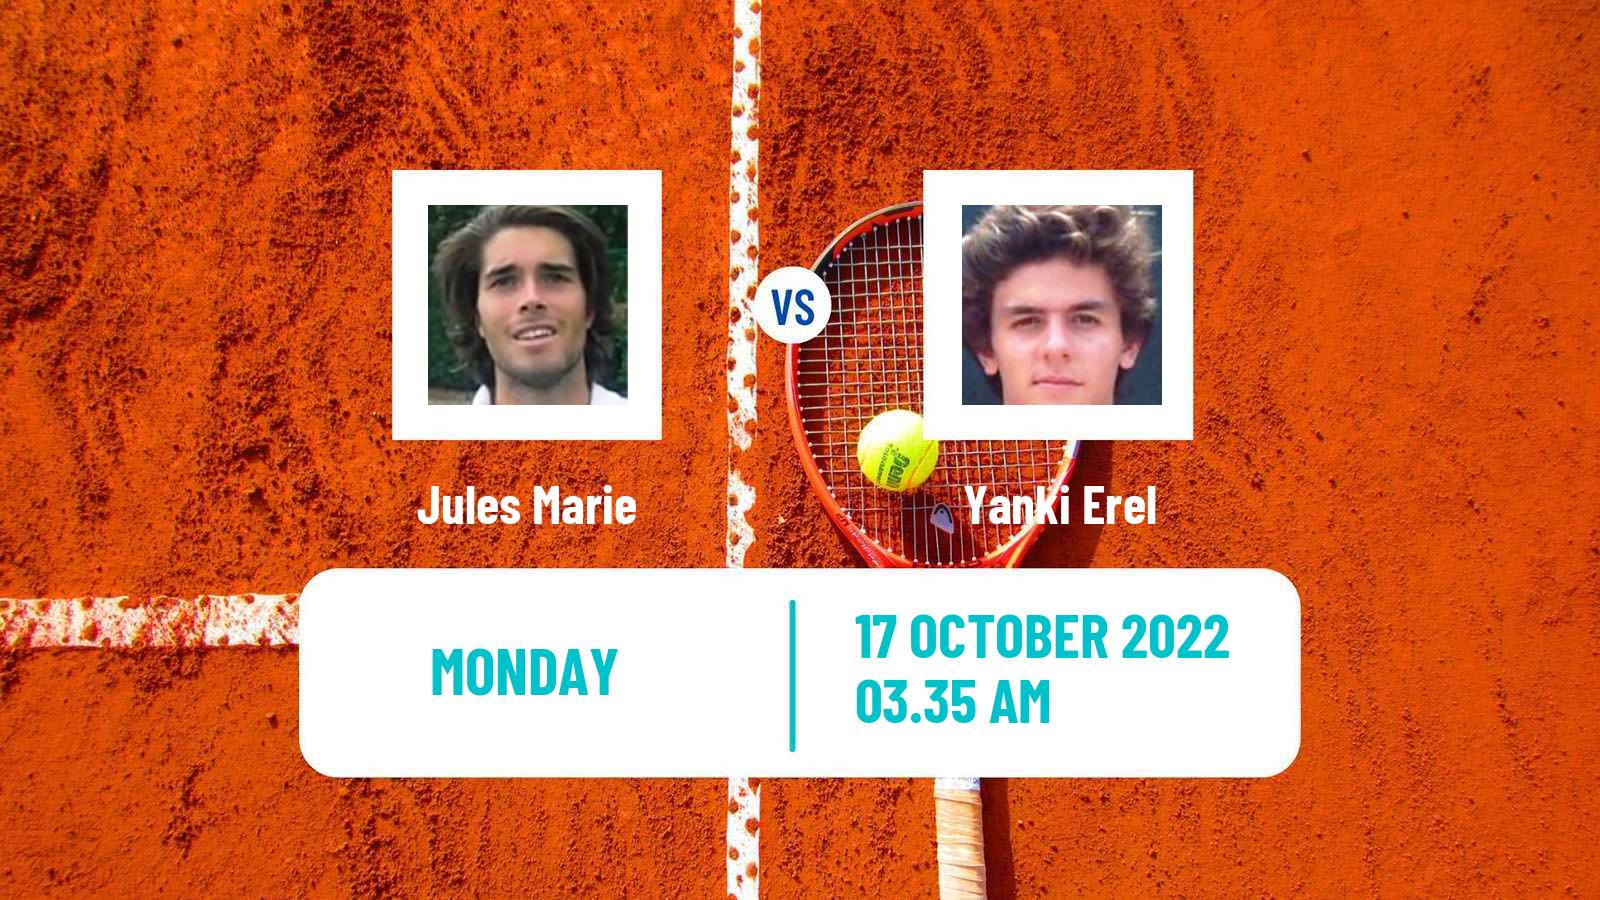 Tennis ATP Challenger Jules Marie - Yanki Erel